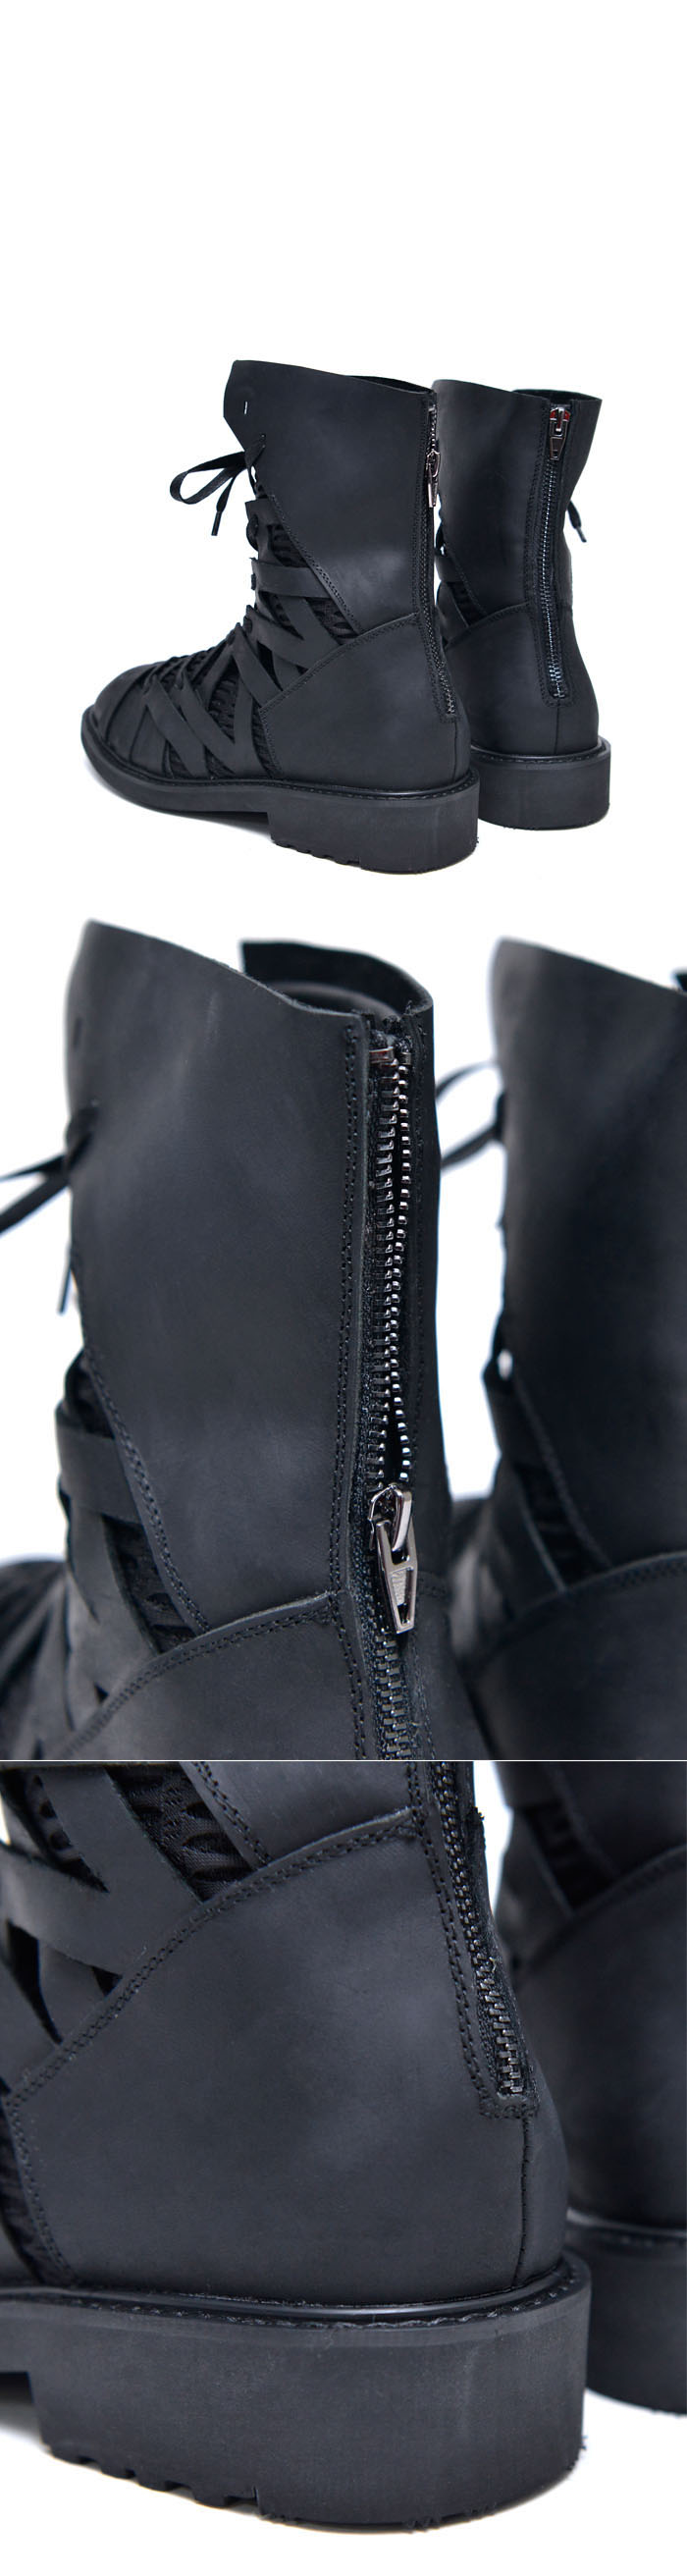 Shoes :: Boots :: Spider Web Matt Leather Boots-Shoes 603 - GUYLOOK Men ...